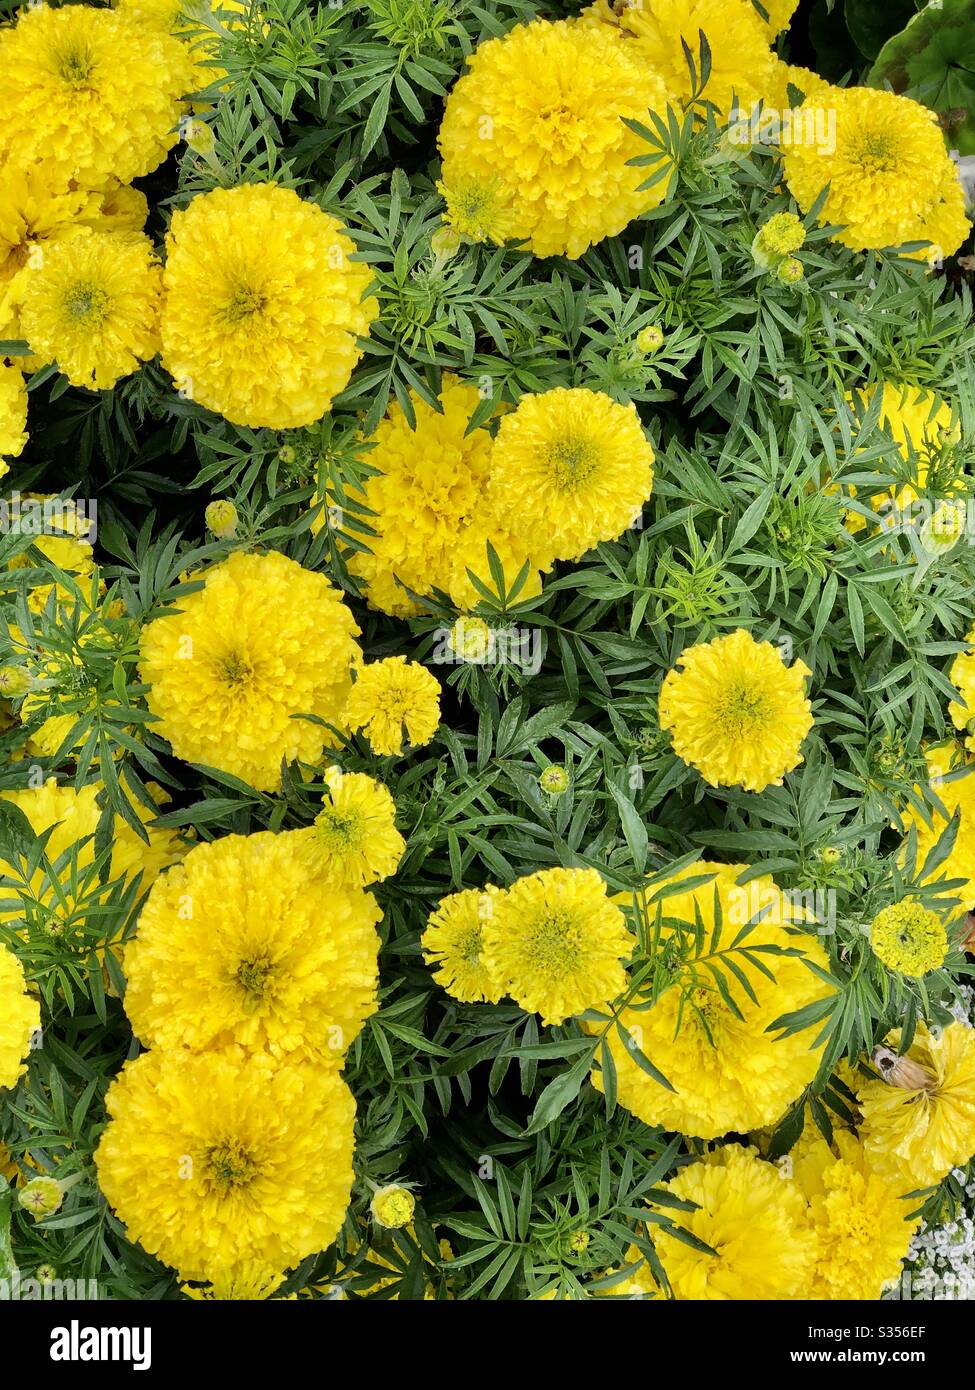 Yellow marigolds in the garden Stock Photo